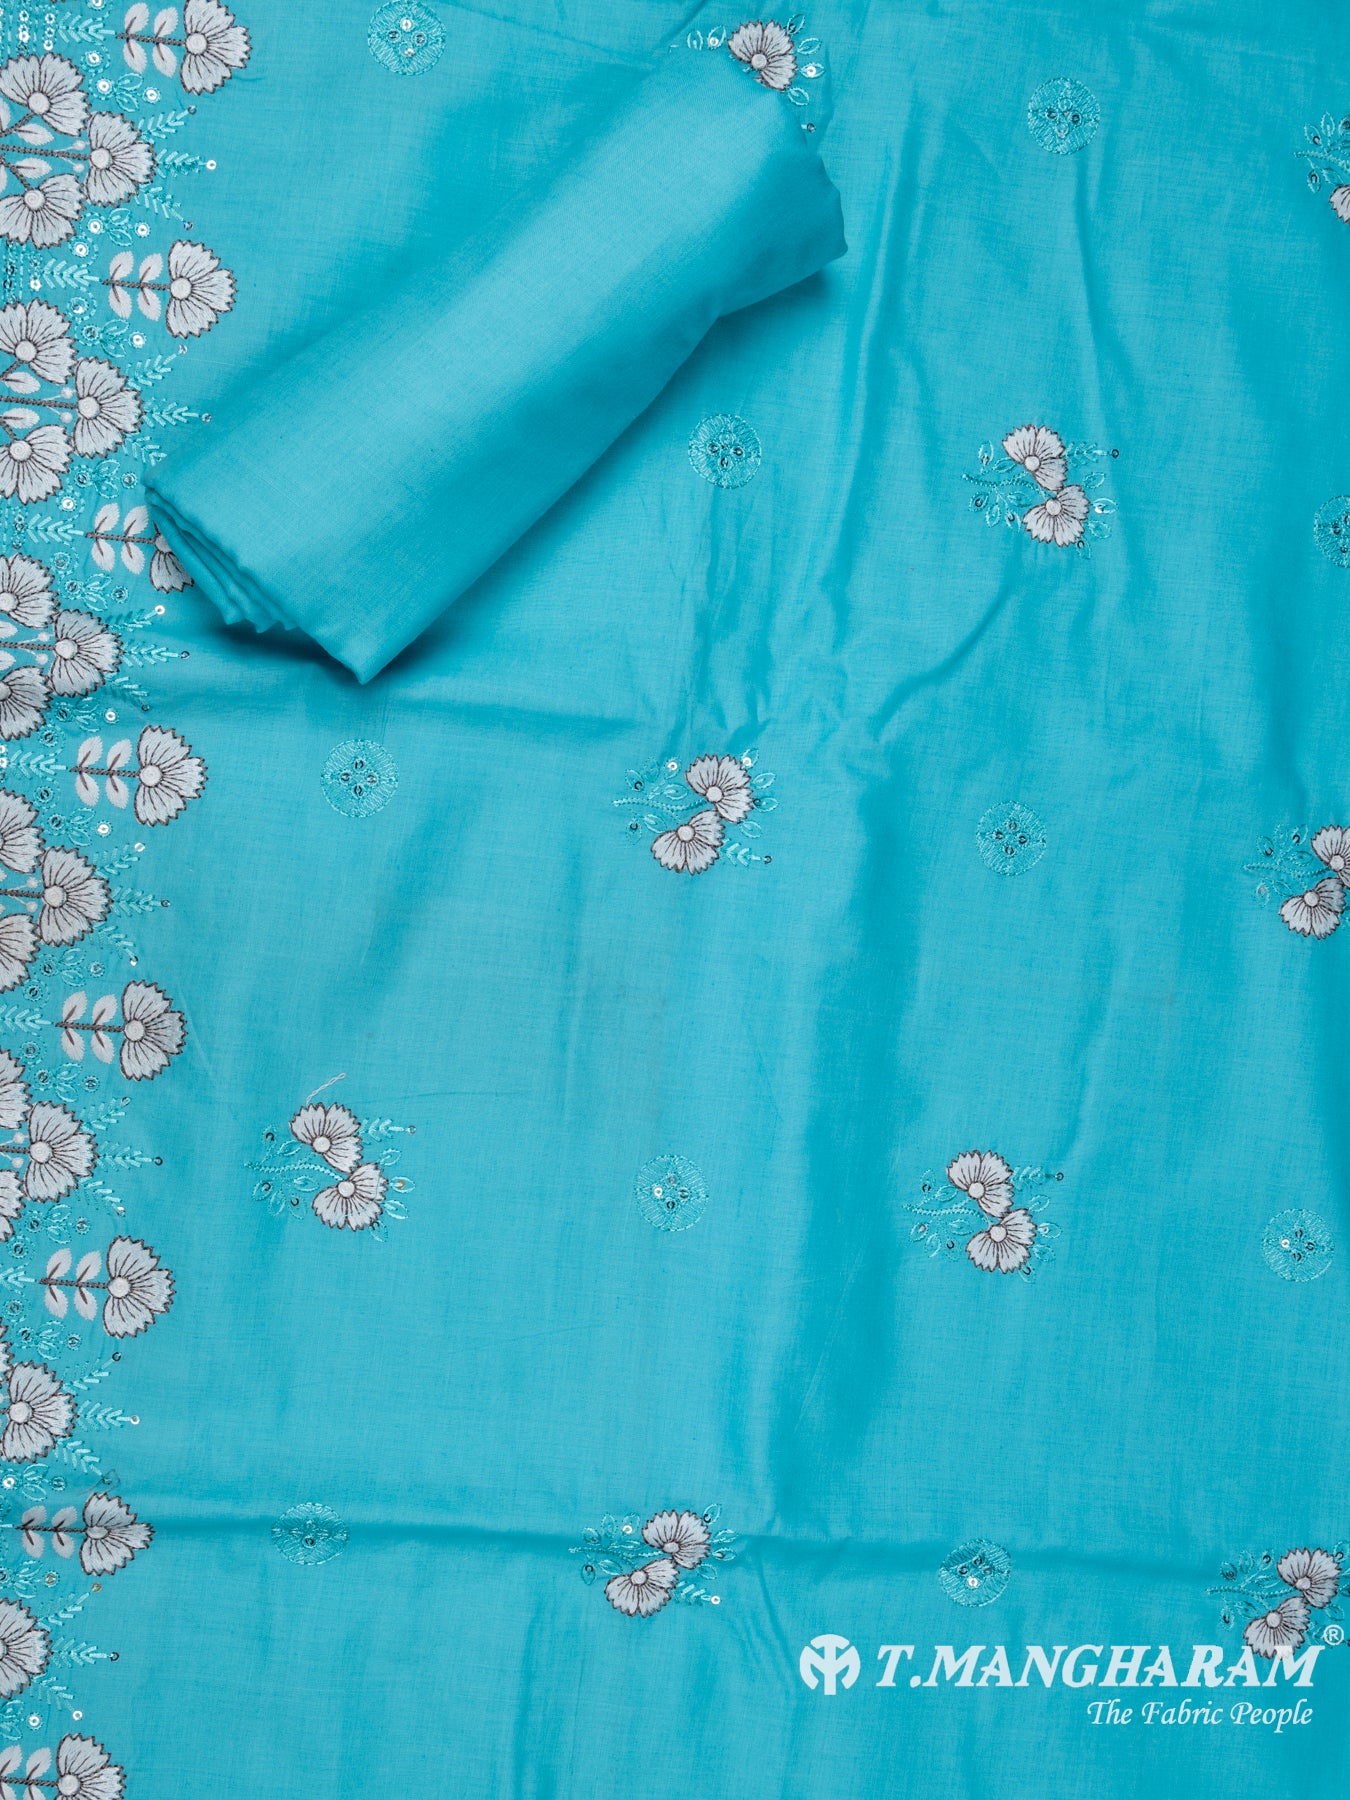 Blue Cotton Chudidhar Fabric Set - EH1449 view-2